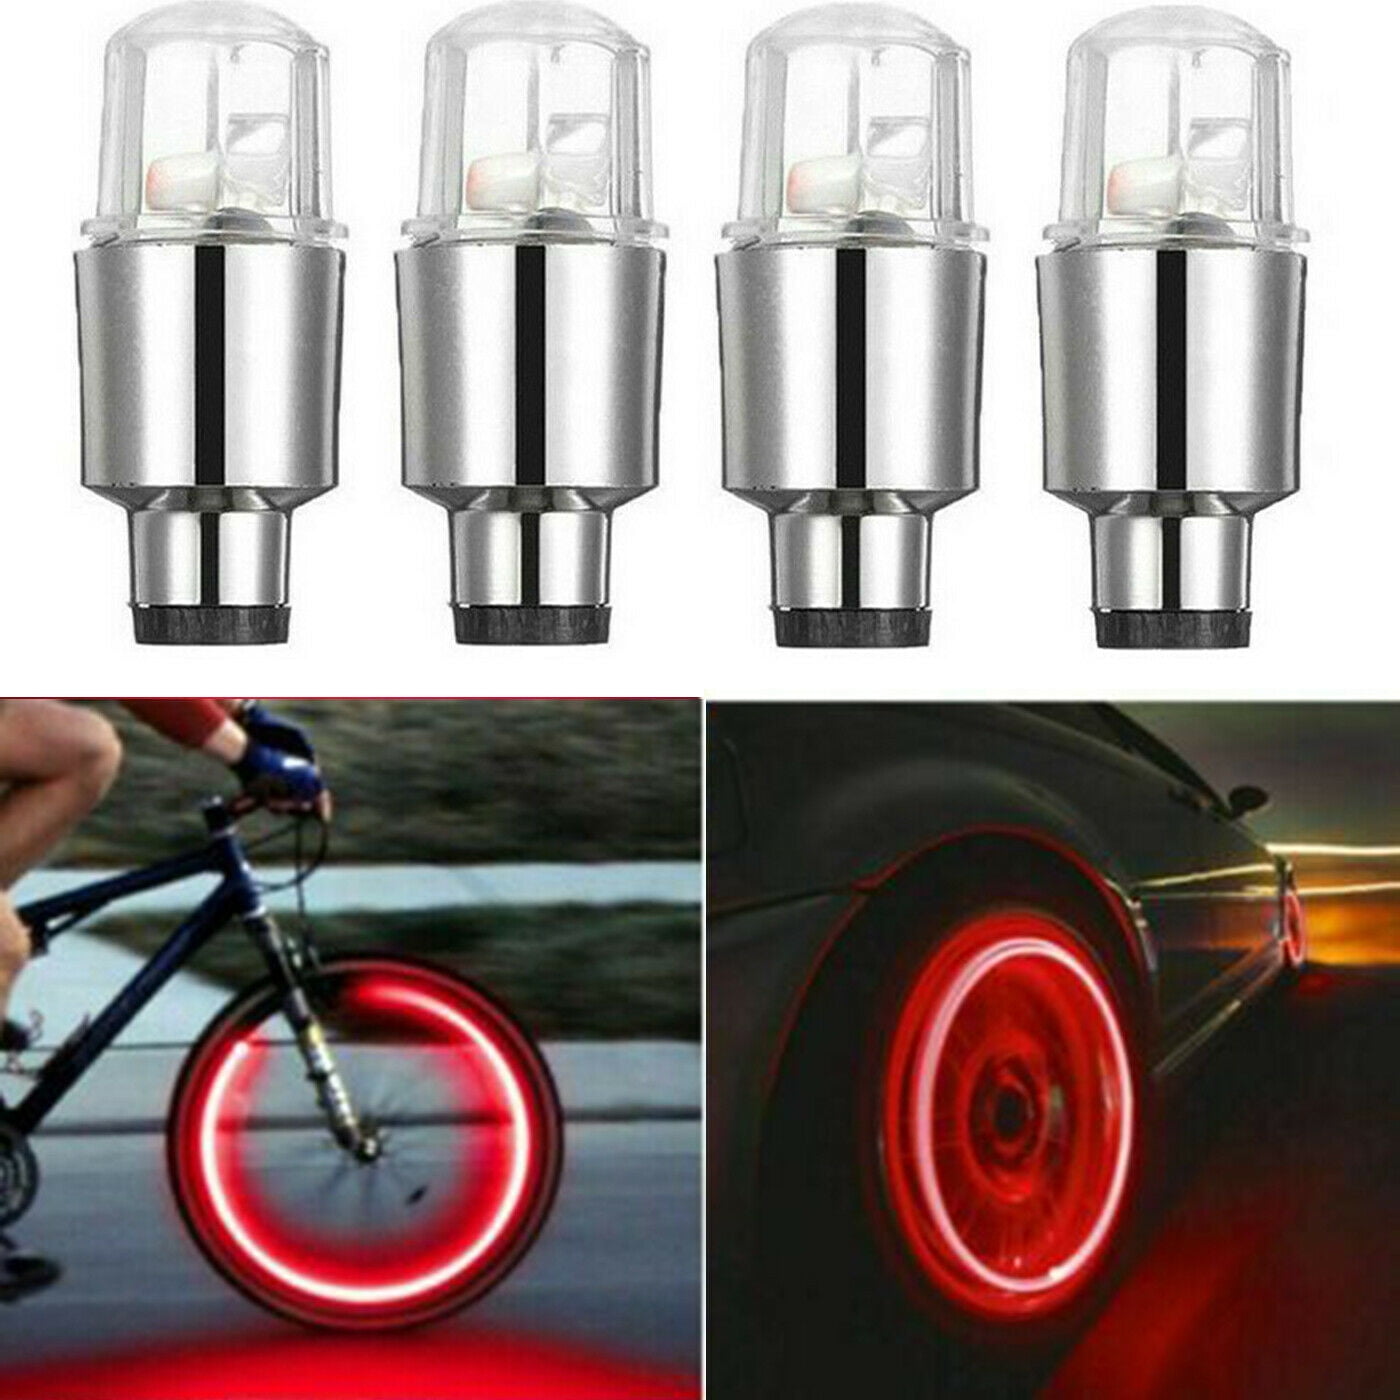 5 LED Flash Light Bicycle Motorcycle Car Bike Tyre Tire Wheel Valve Lamp USSTOCK